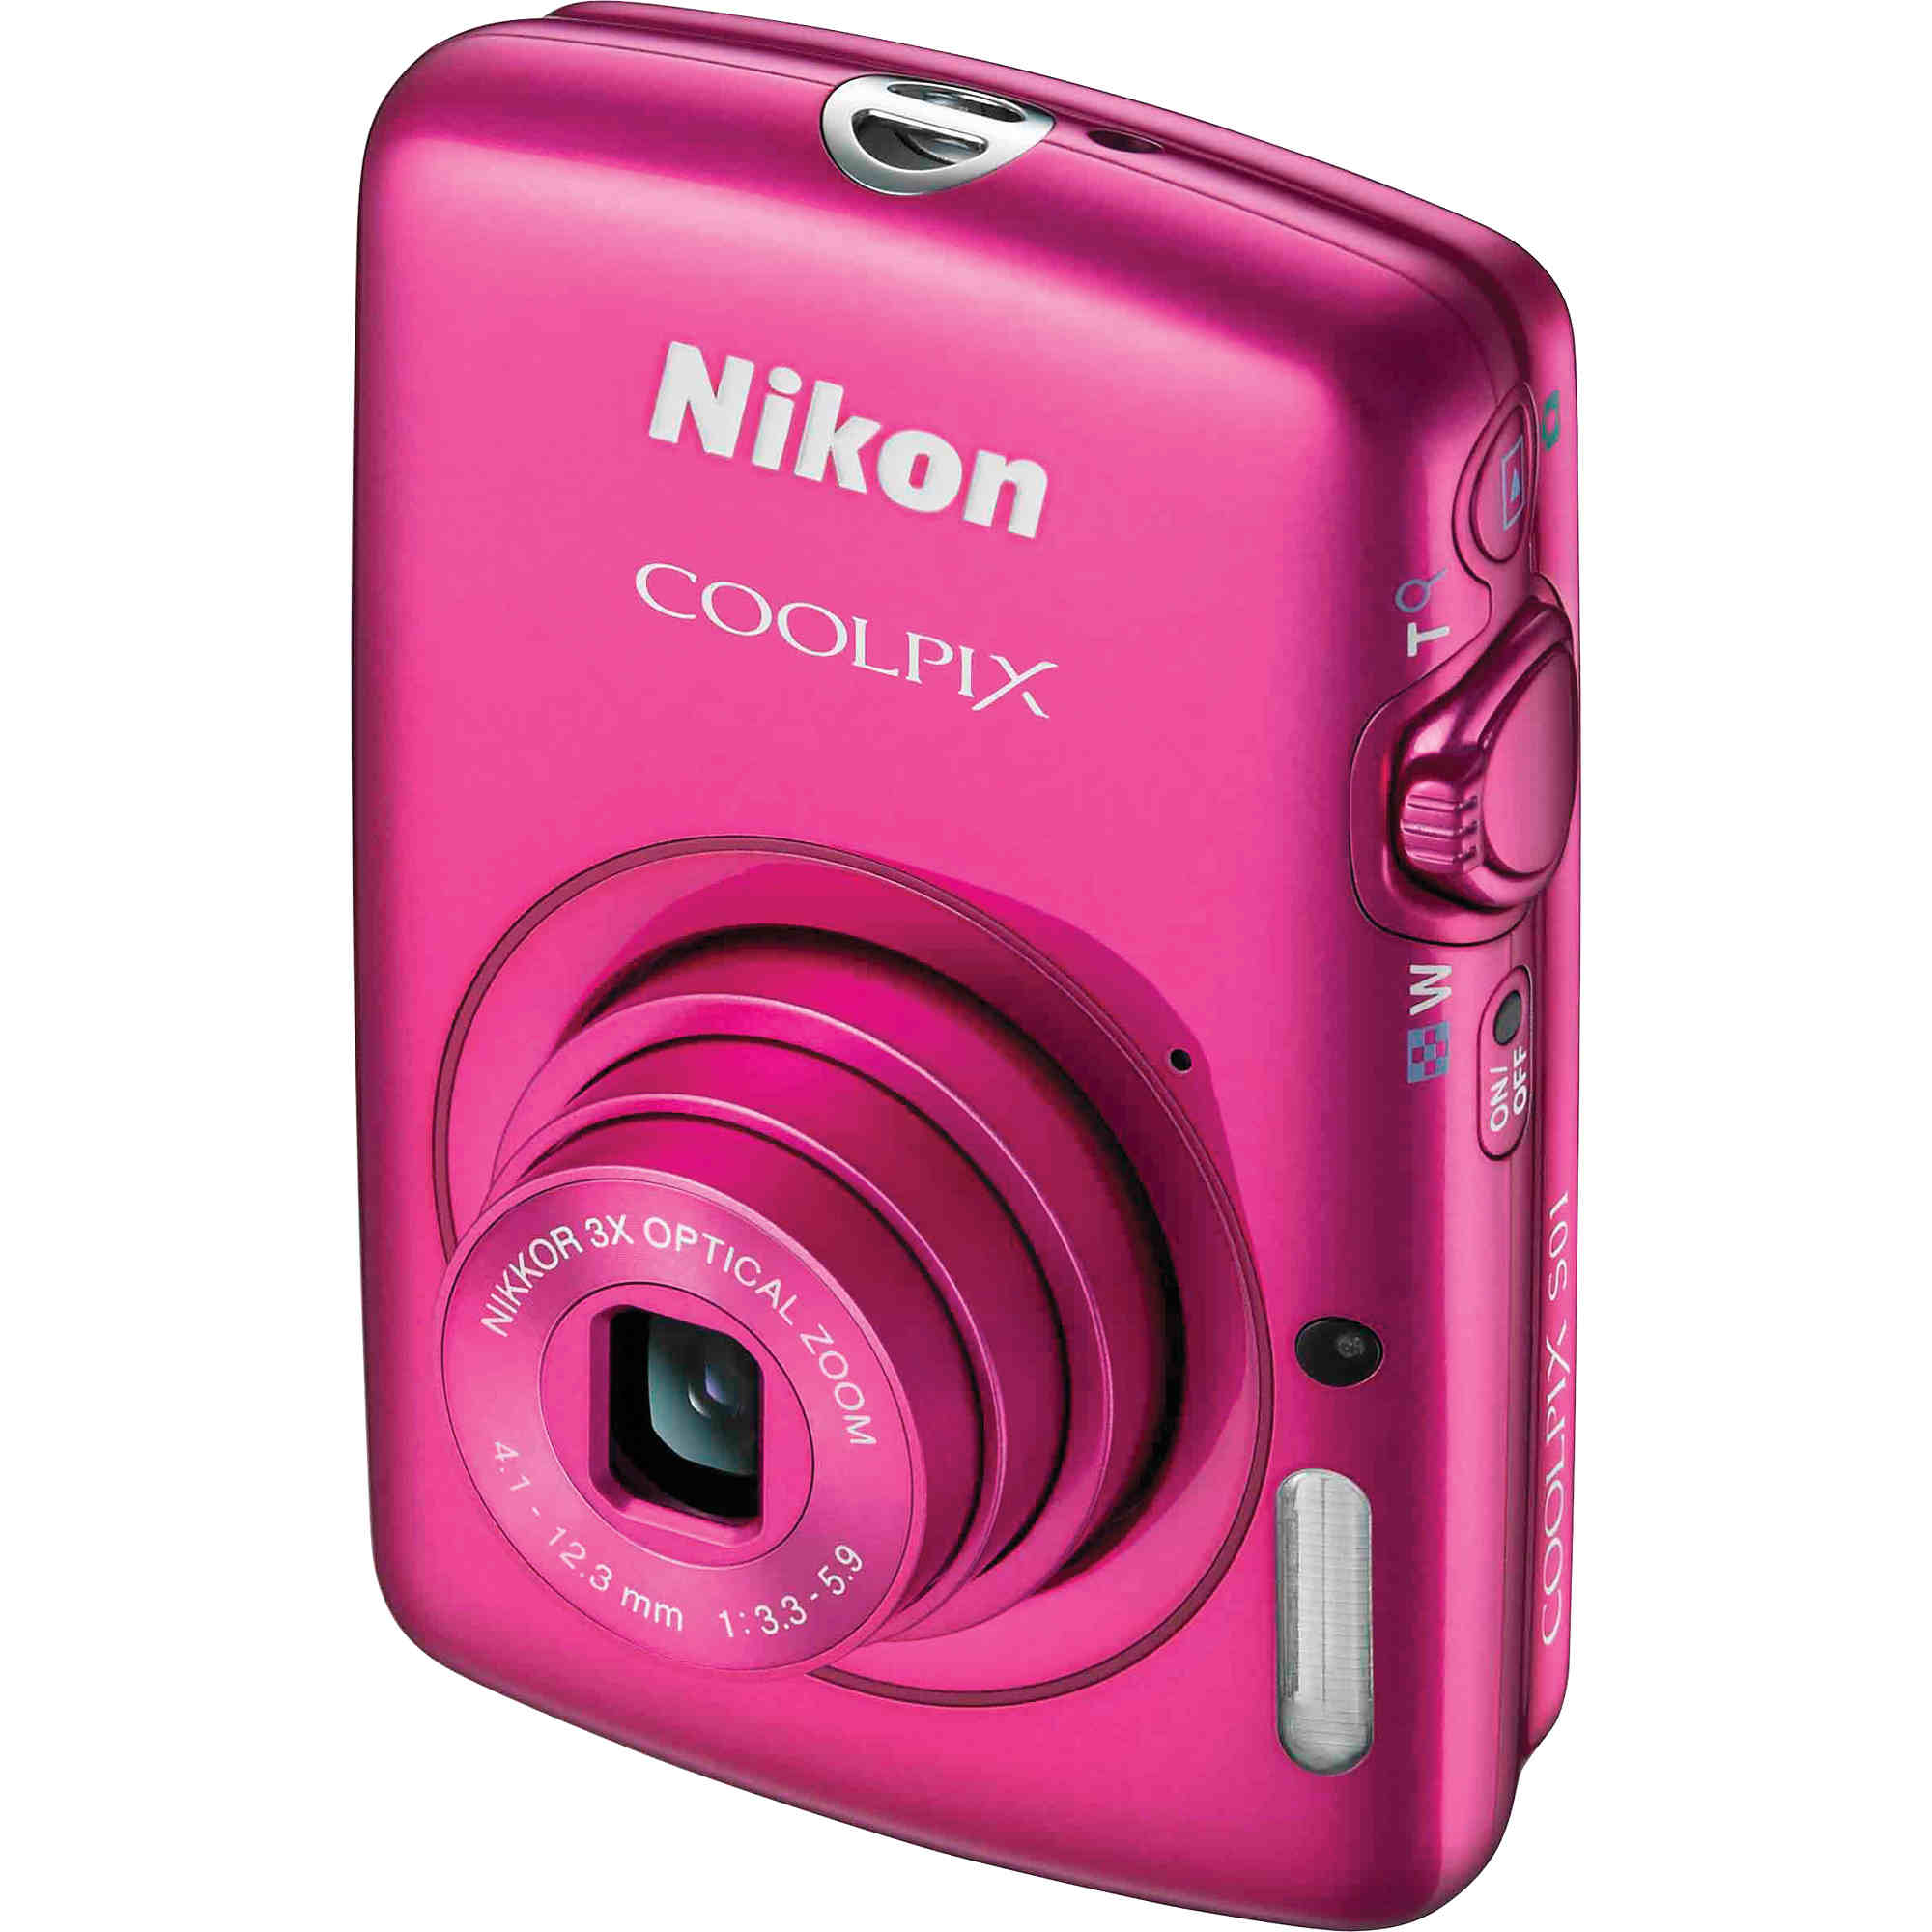 Get More Information On Nikon Cameras